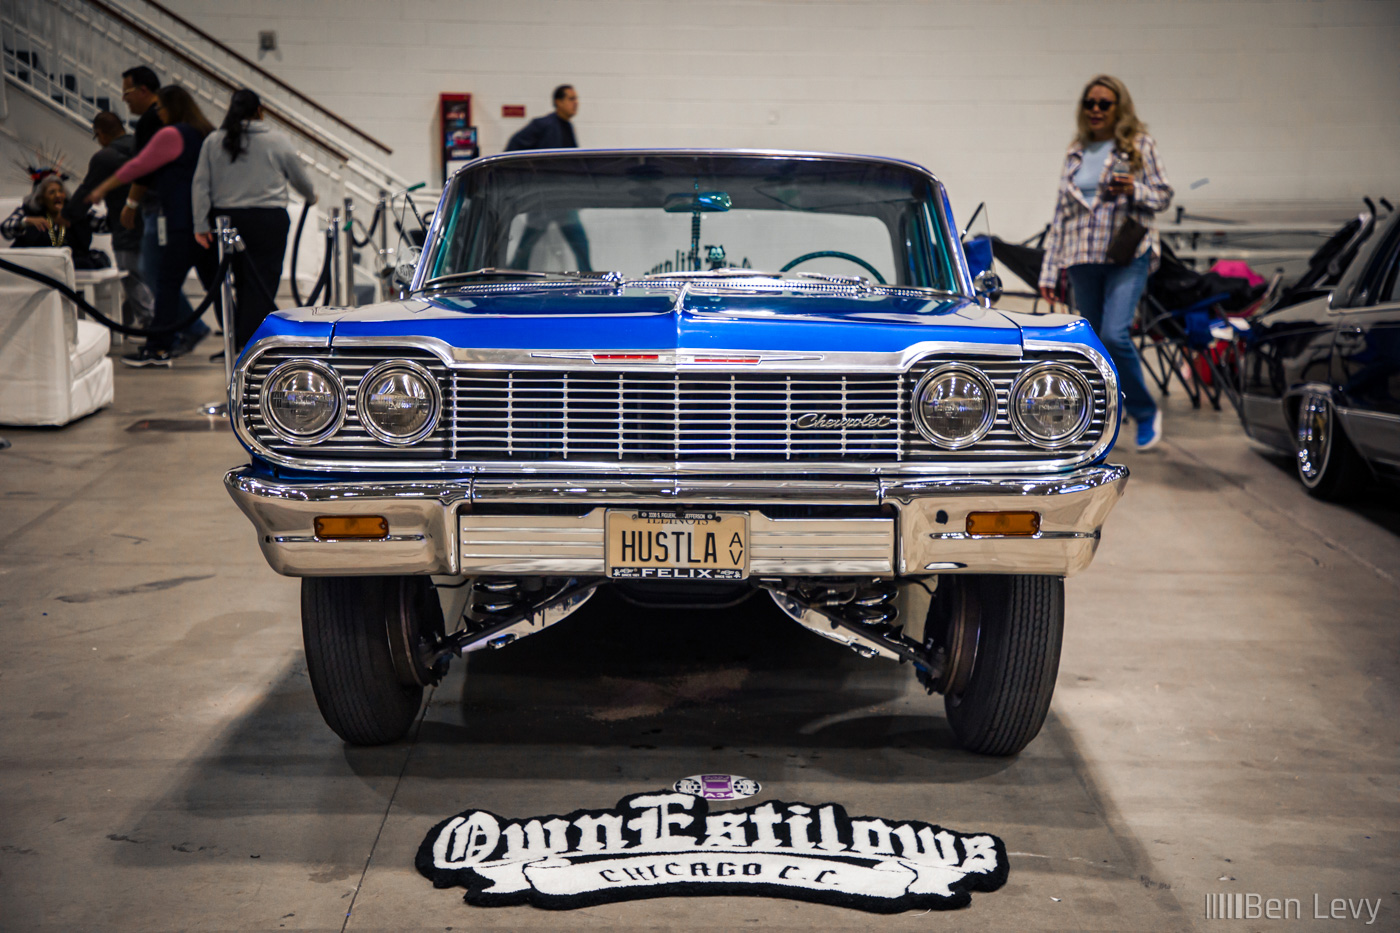 Front of Blue Impala from Own Estilows Car Club